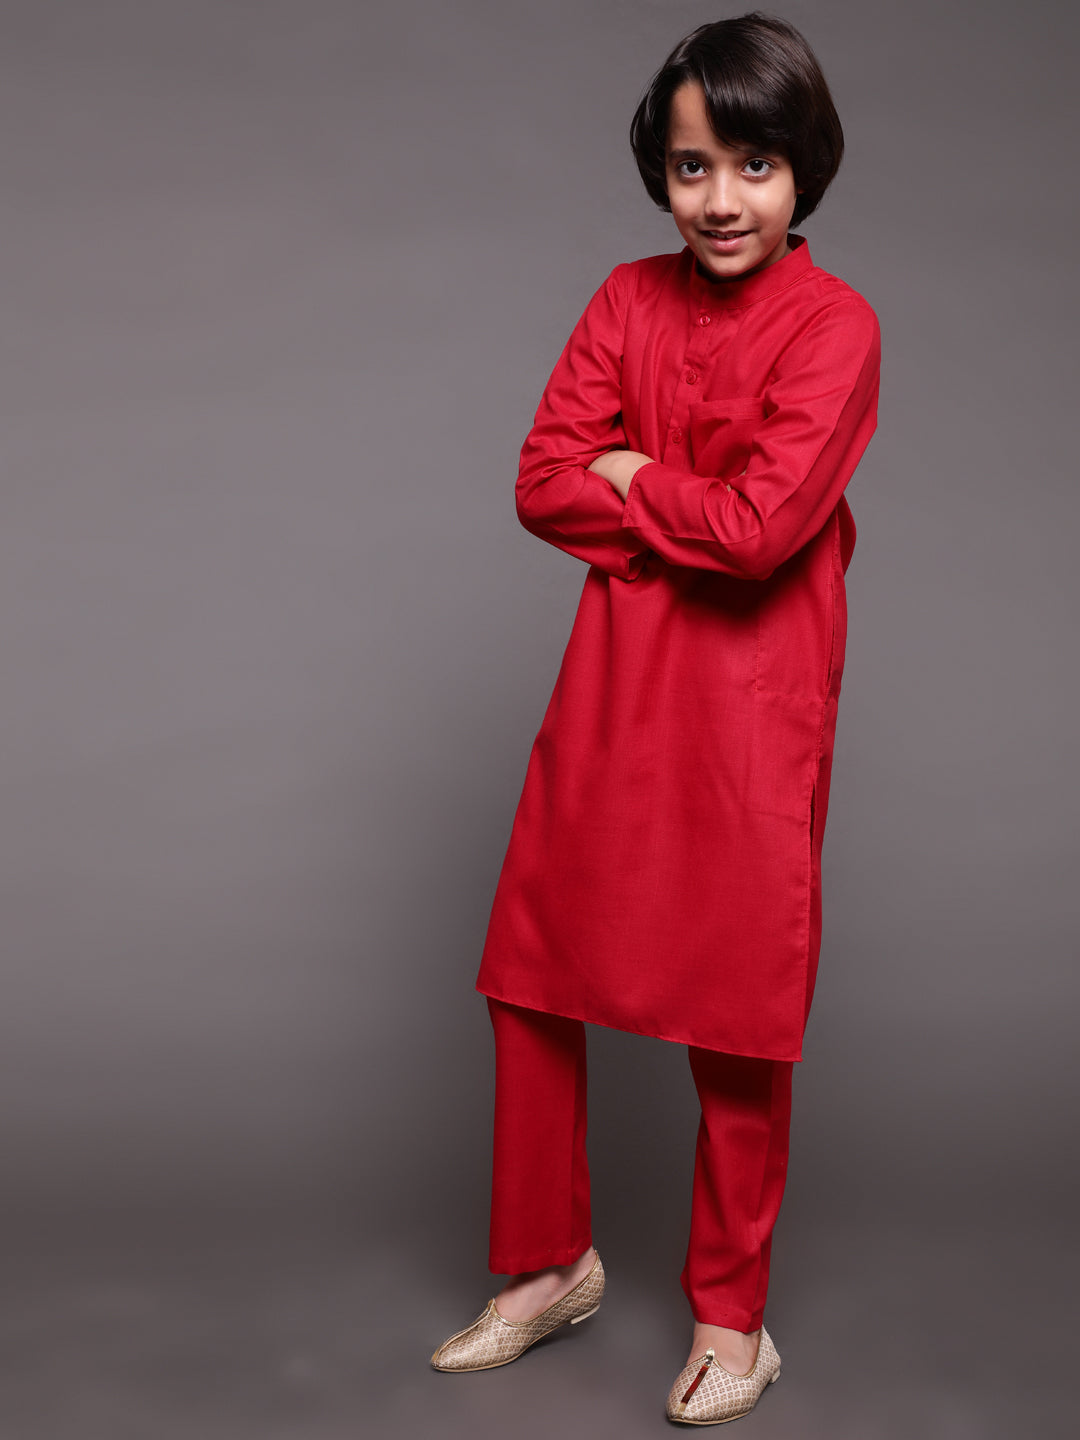 Red & Mustard Floral Print Kurta Pyjama With Nehru Jacket